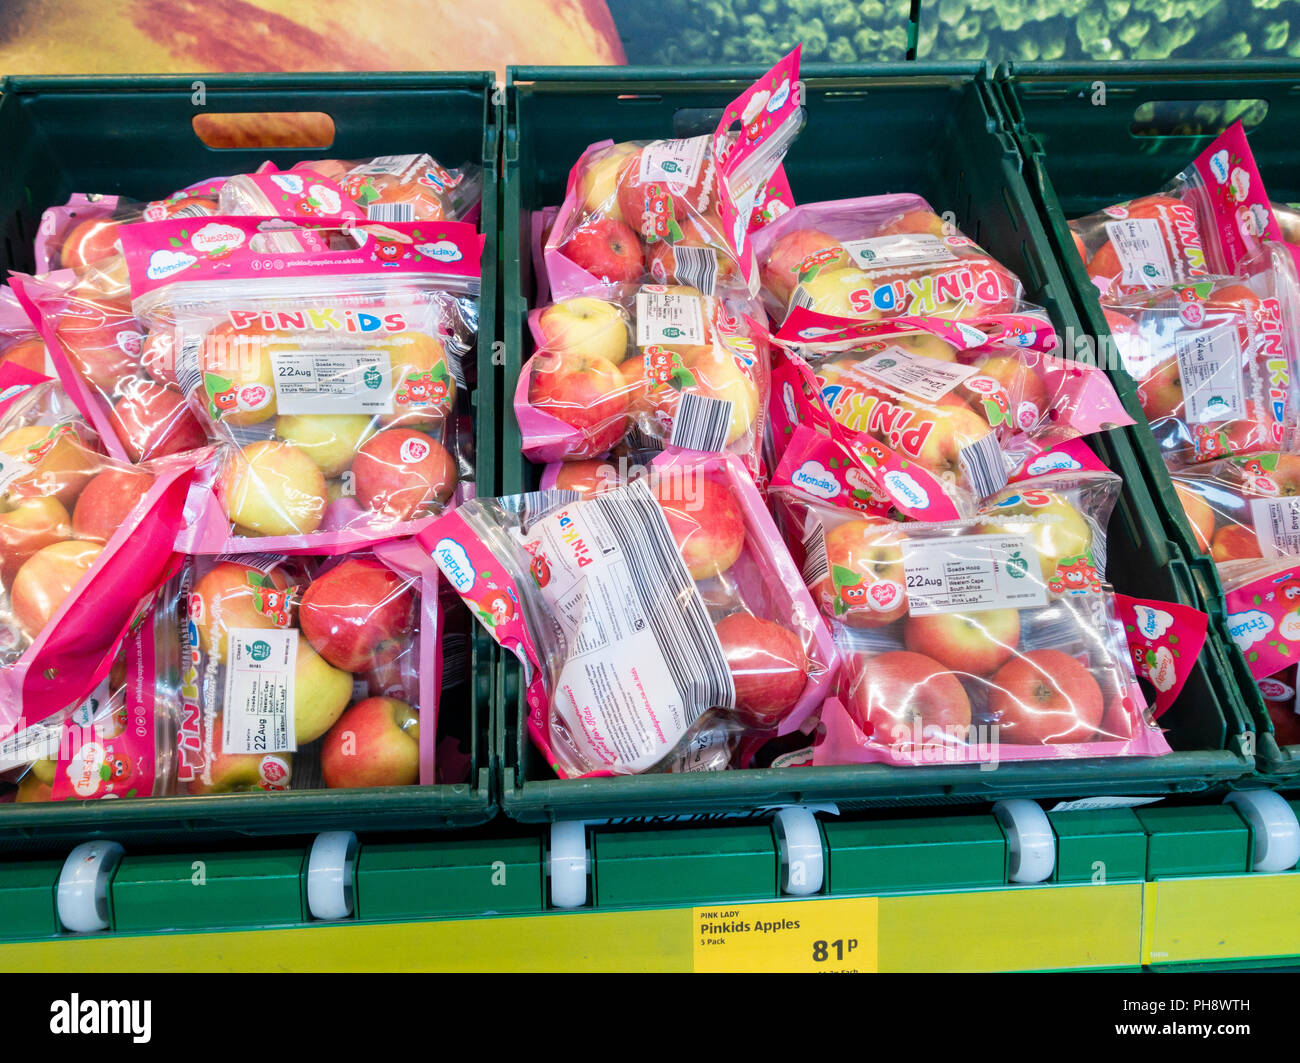 Pinkids Apples in plastic packaging in Aldi supermarket. UK Stock Photo